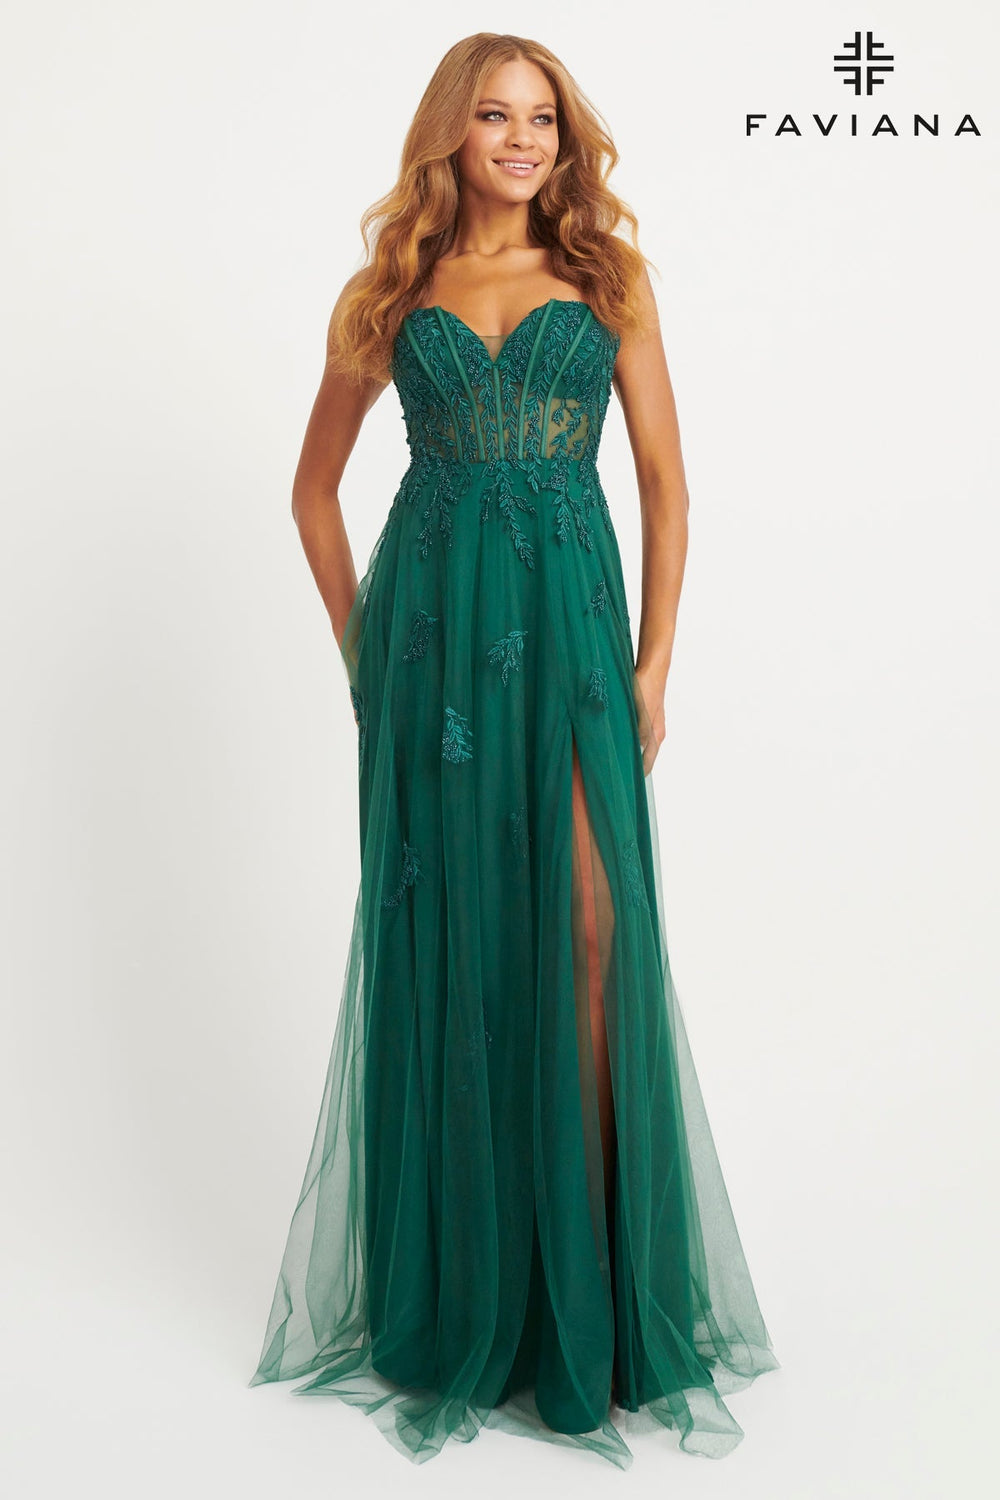 Faviana Prom Dress Faviana 11057 Dress